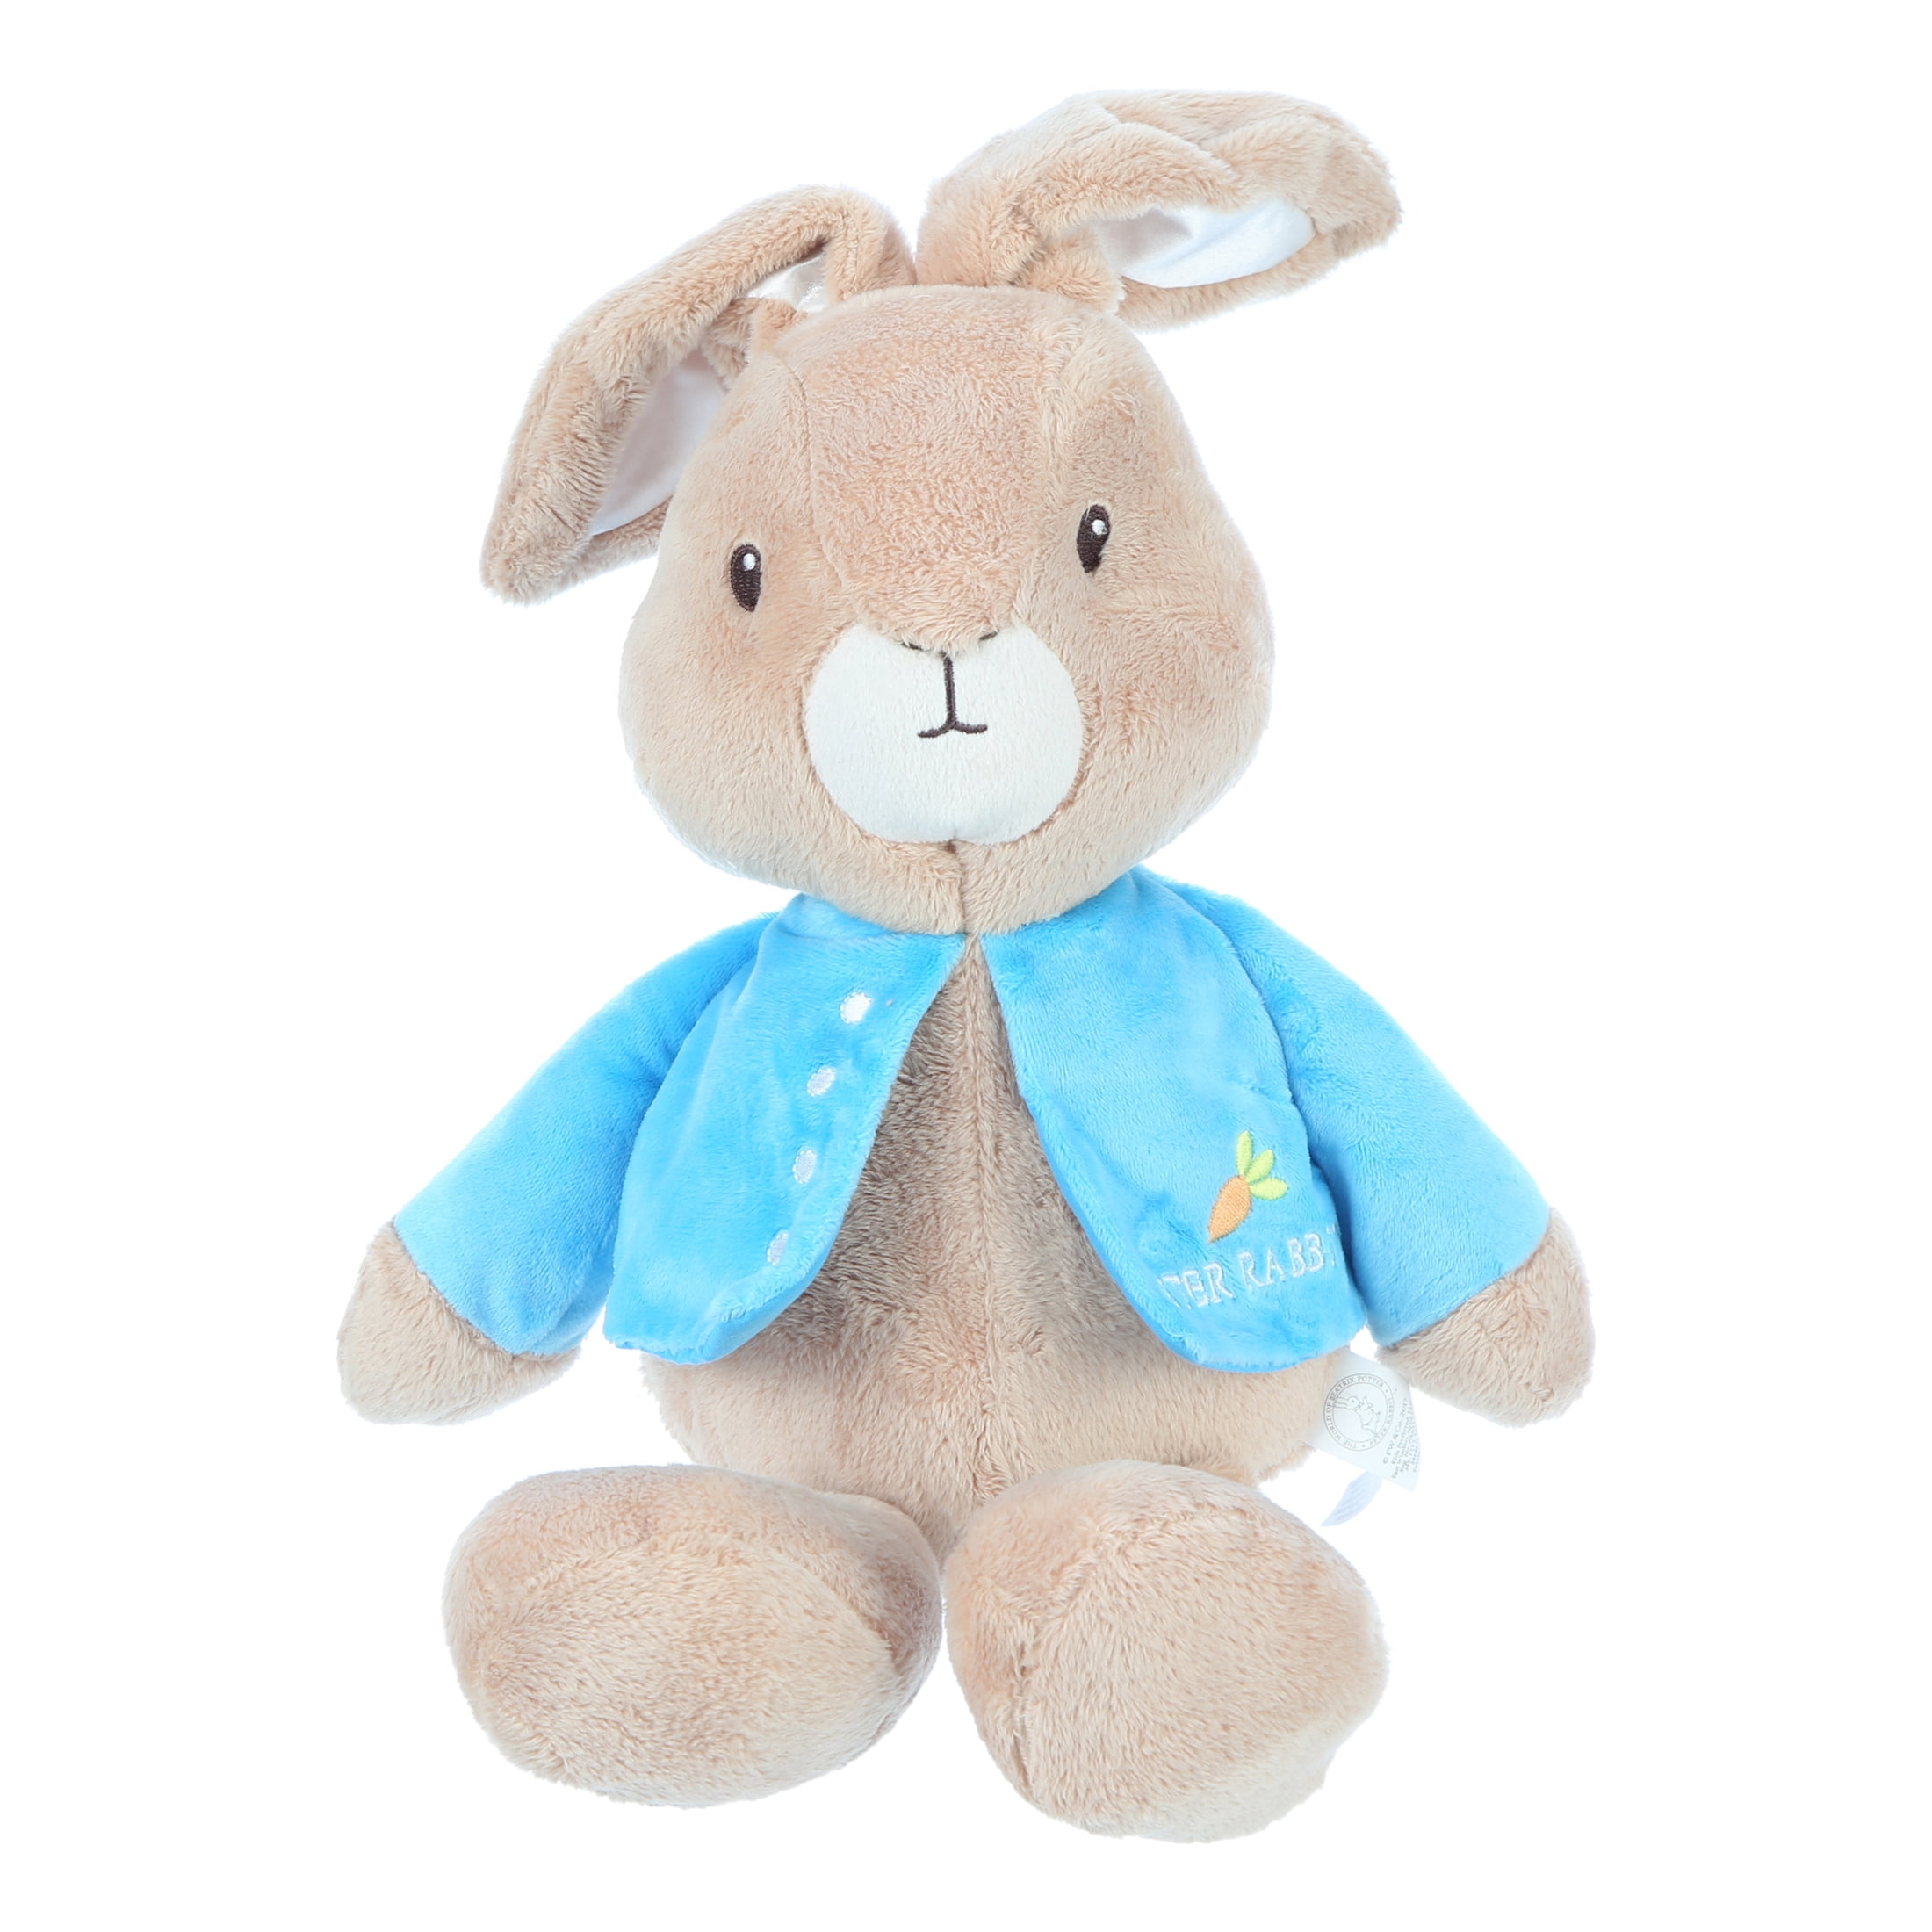 Kids Preferred 24106 Beatrix Potter Peter Rabbit Jack Plush for sale online 